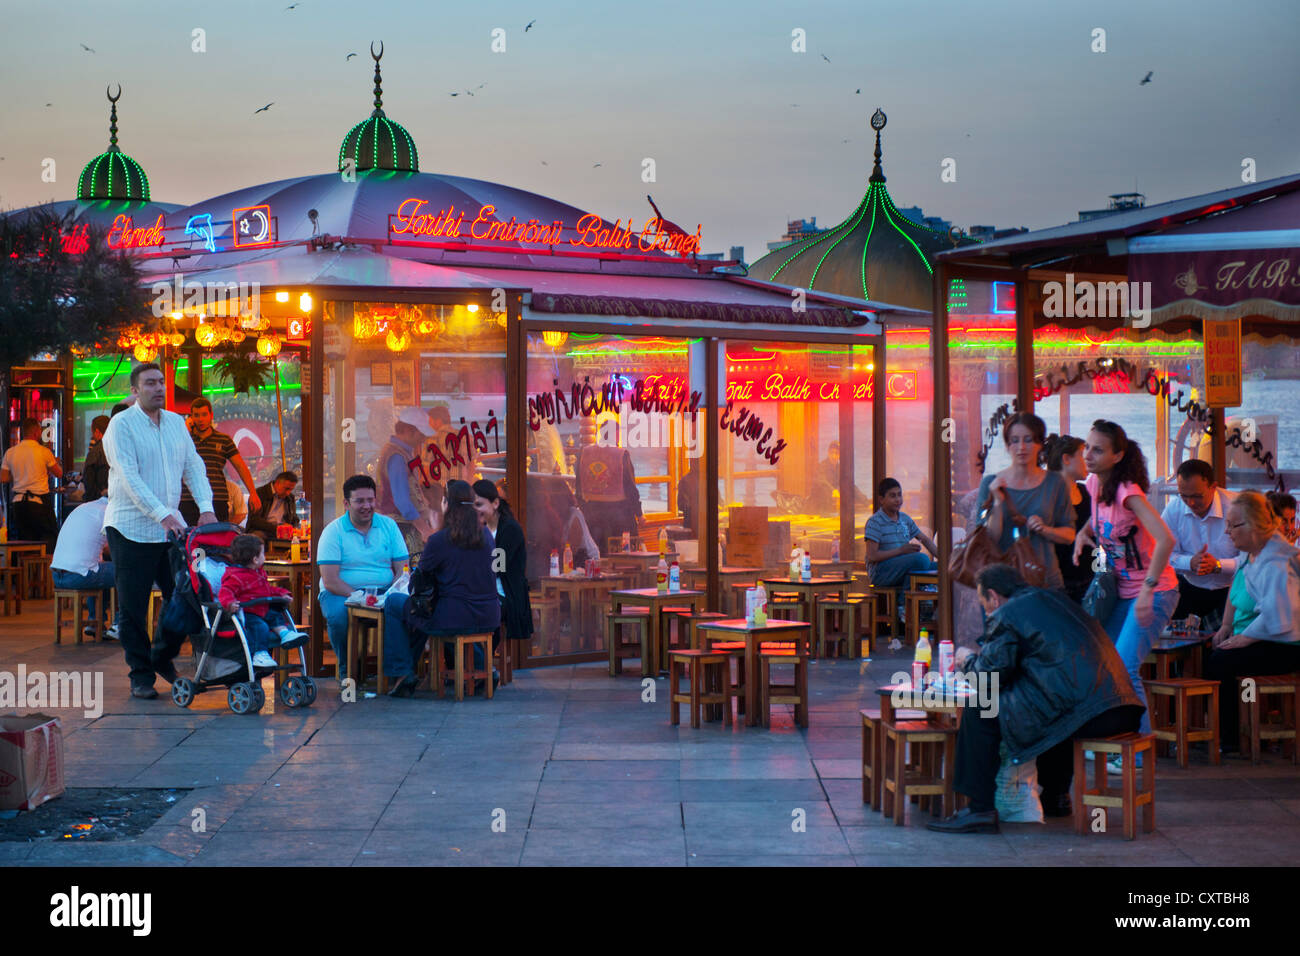 Türkei, Istanbul, Eminönü, Platz an der Galatabrücke mit den berühmten Balik Ekmek, ein Fischbrötchen mit Salat. Foto Stock